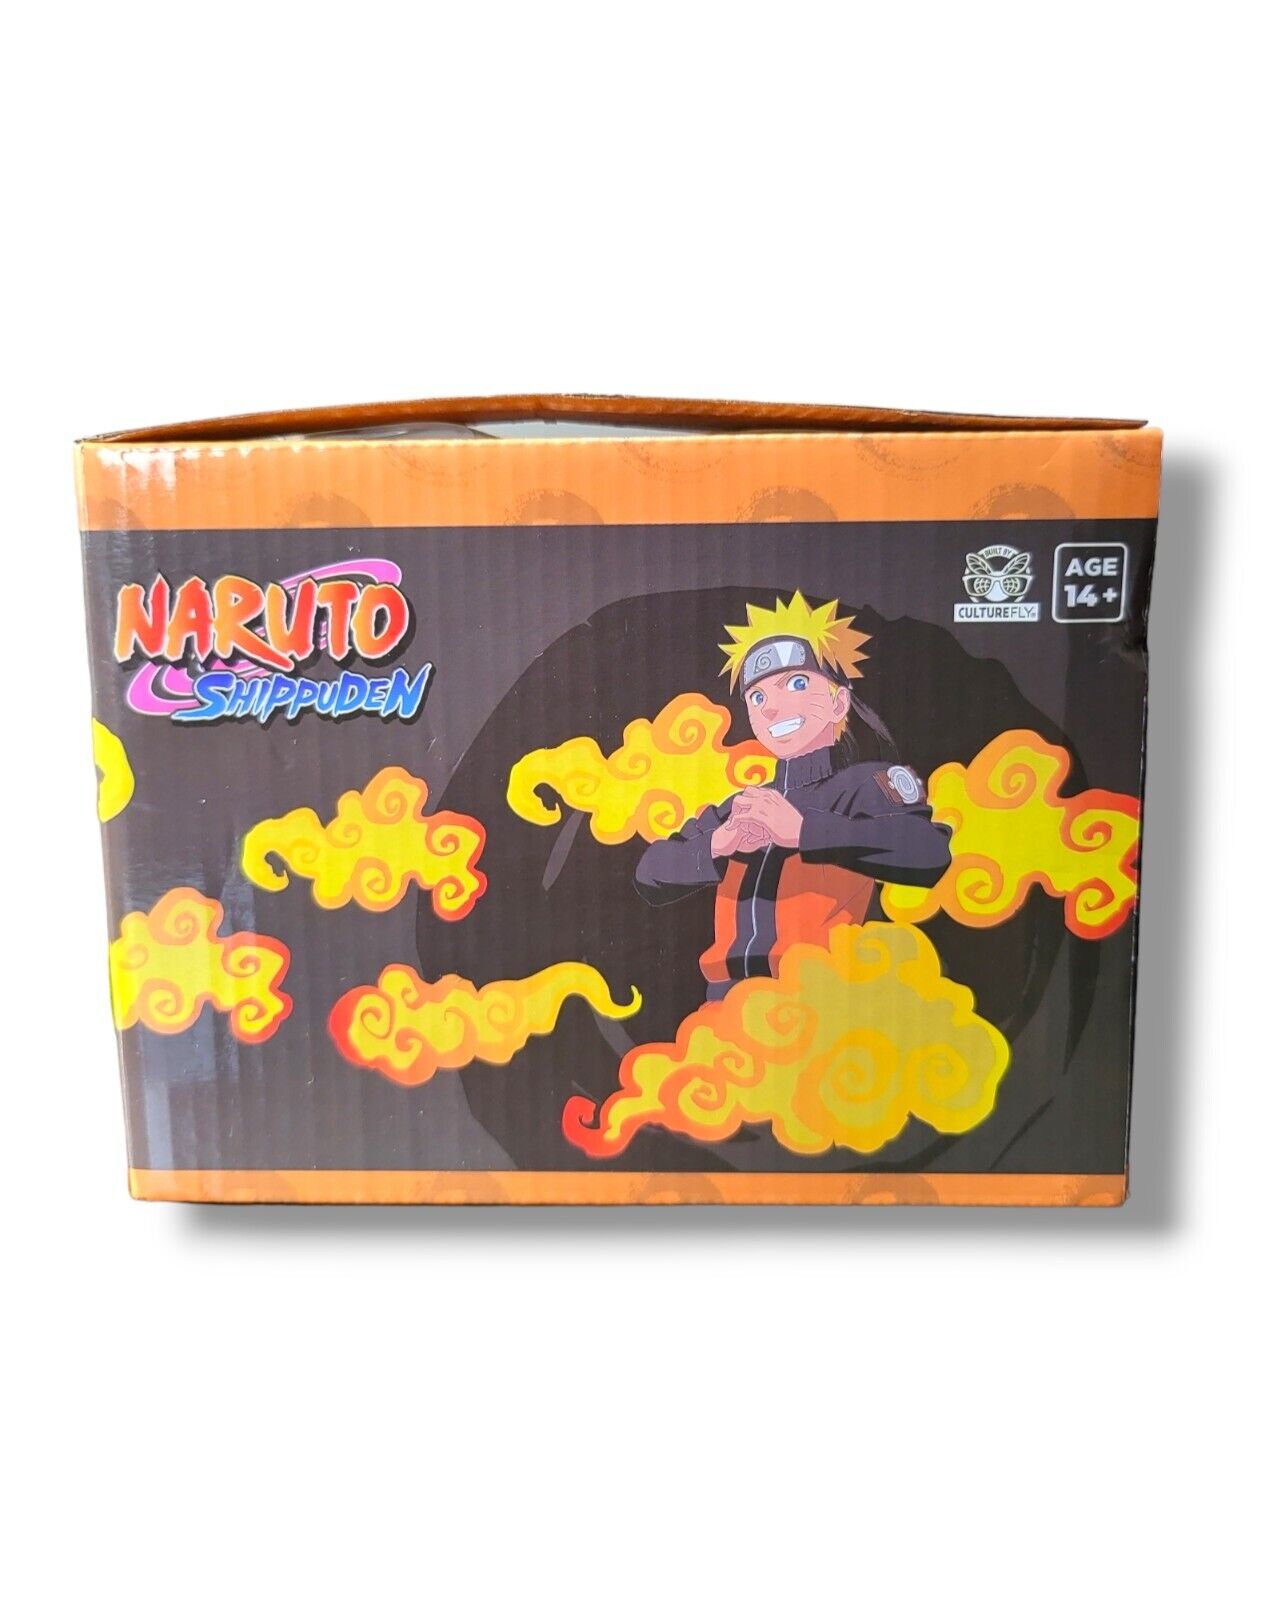 Naruto Ramen Bowl - Ricky's Garage